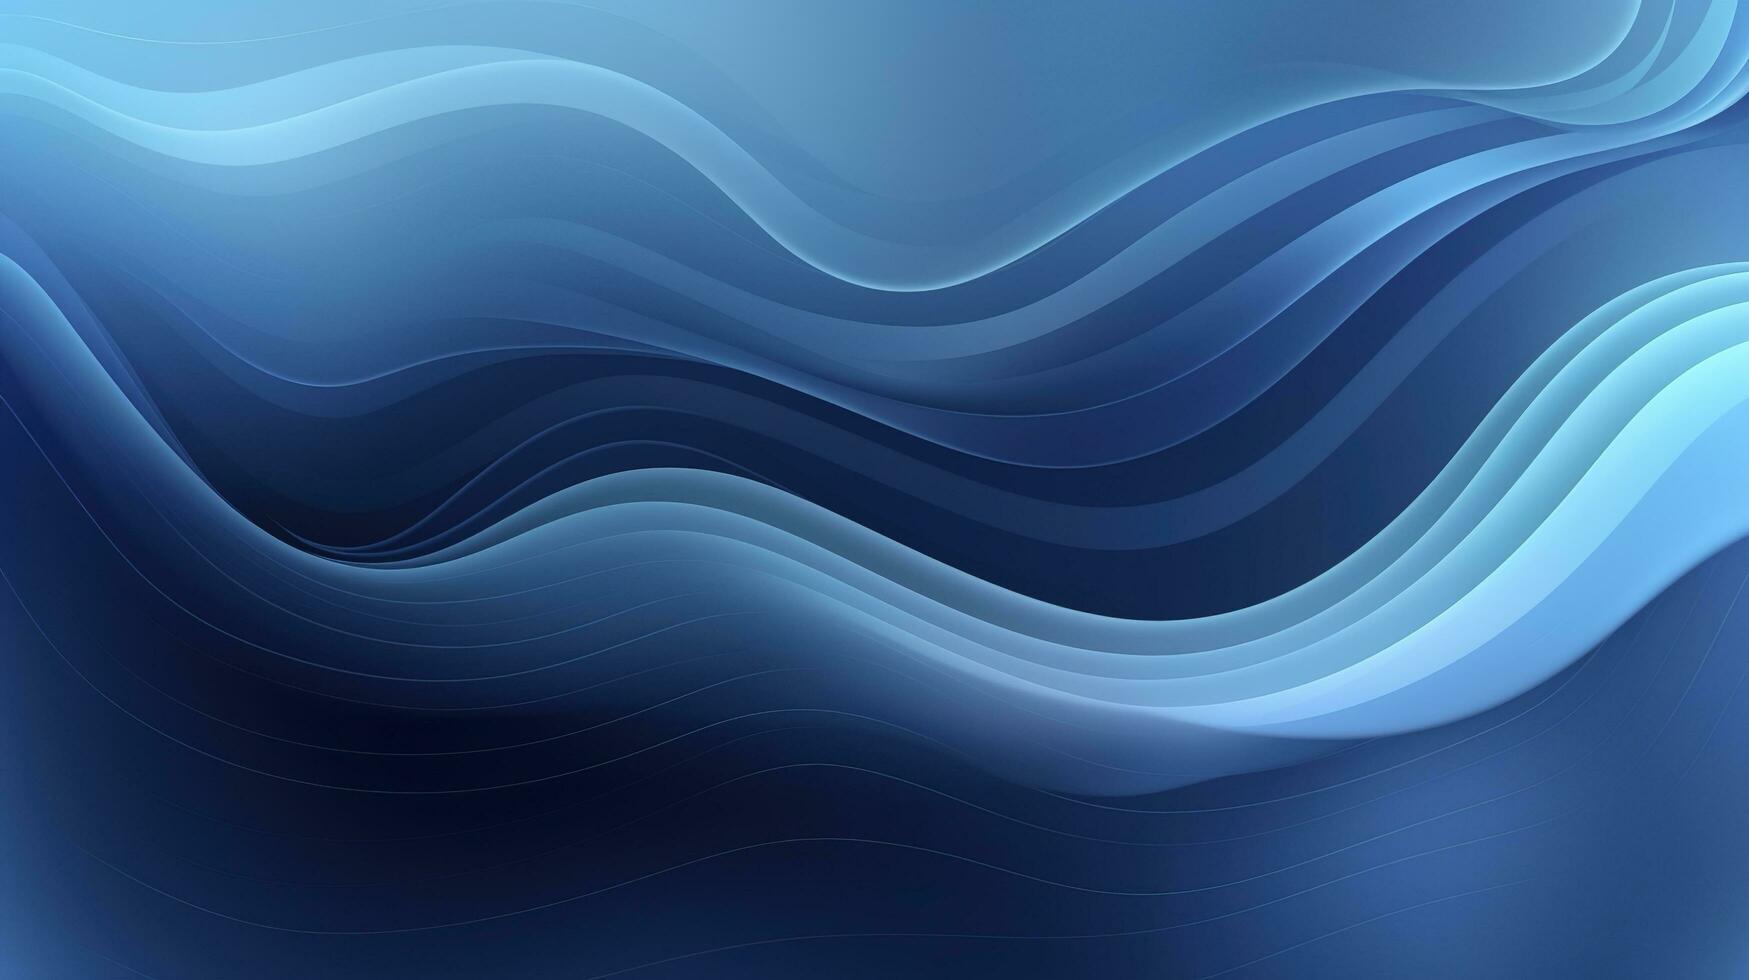 abstract blauw Golf achtergrond, in de stijl van precisiewerker lijnen, biologisch contouren, James turrell, spiralen en bochten, ultrafijn detail, rand licht, zachtgerand, genereren ai foto